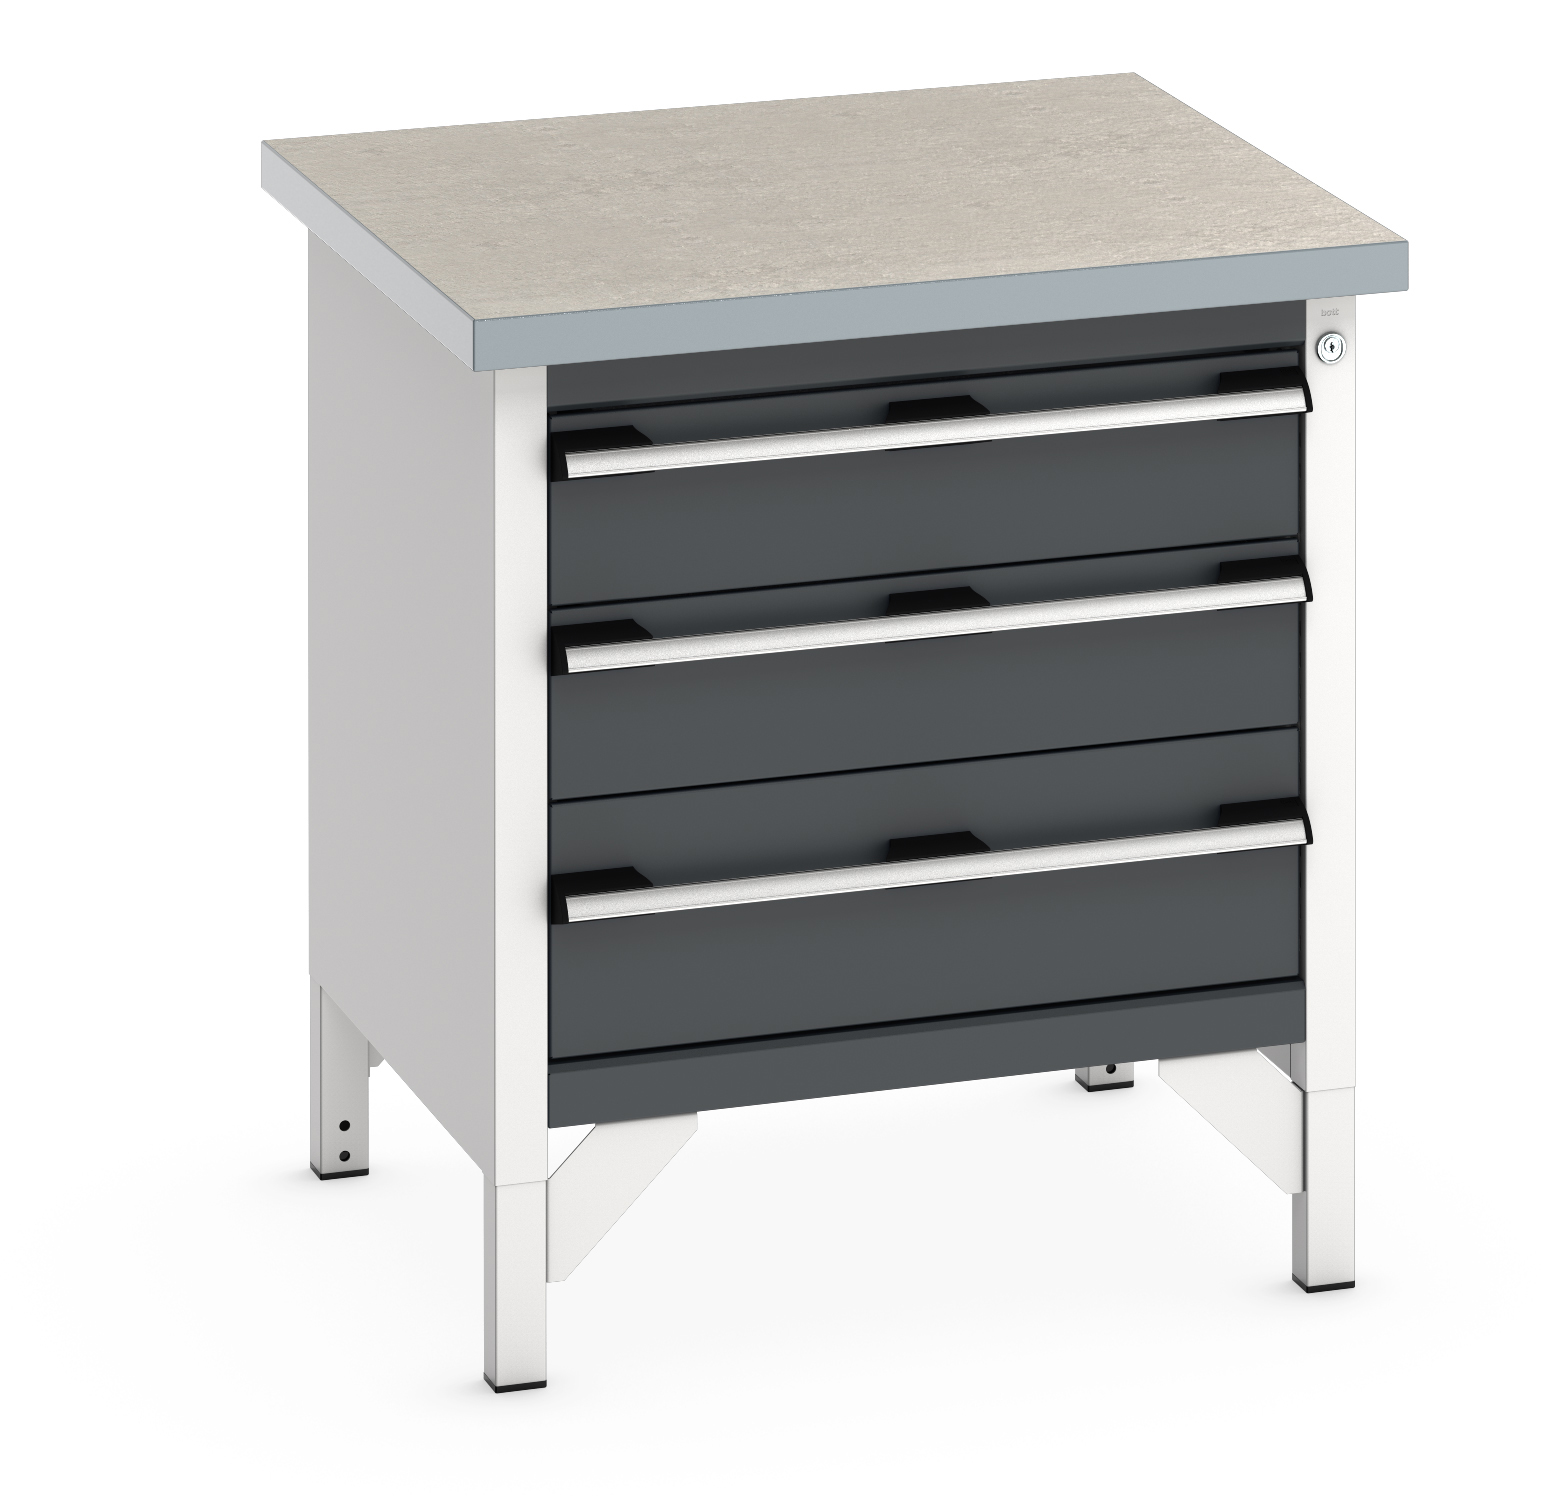 Bott Cubio Storage Bench With 3 Drawer Cabinet - 41002012.19V